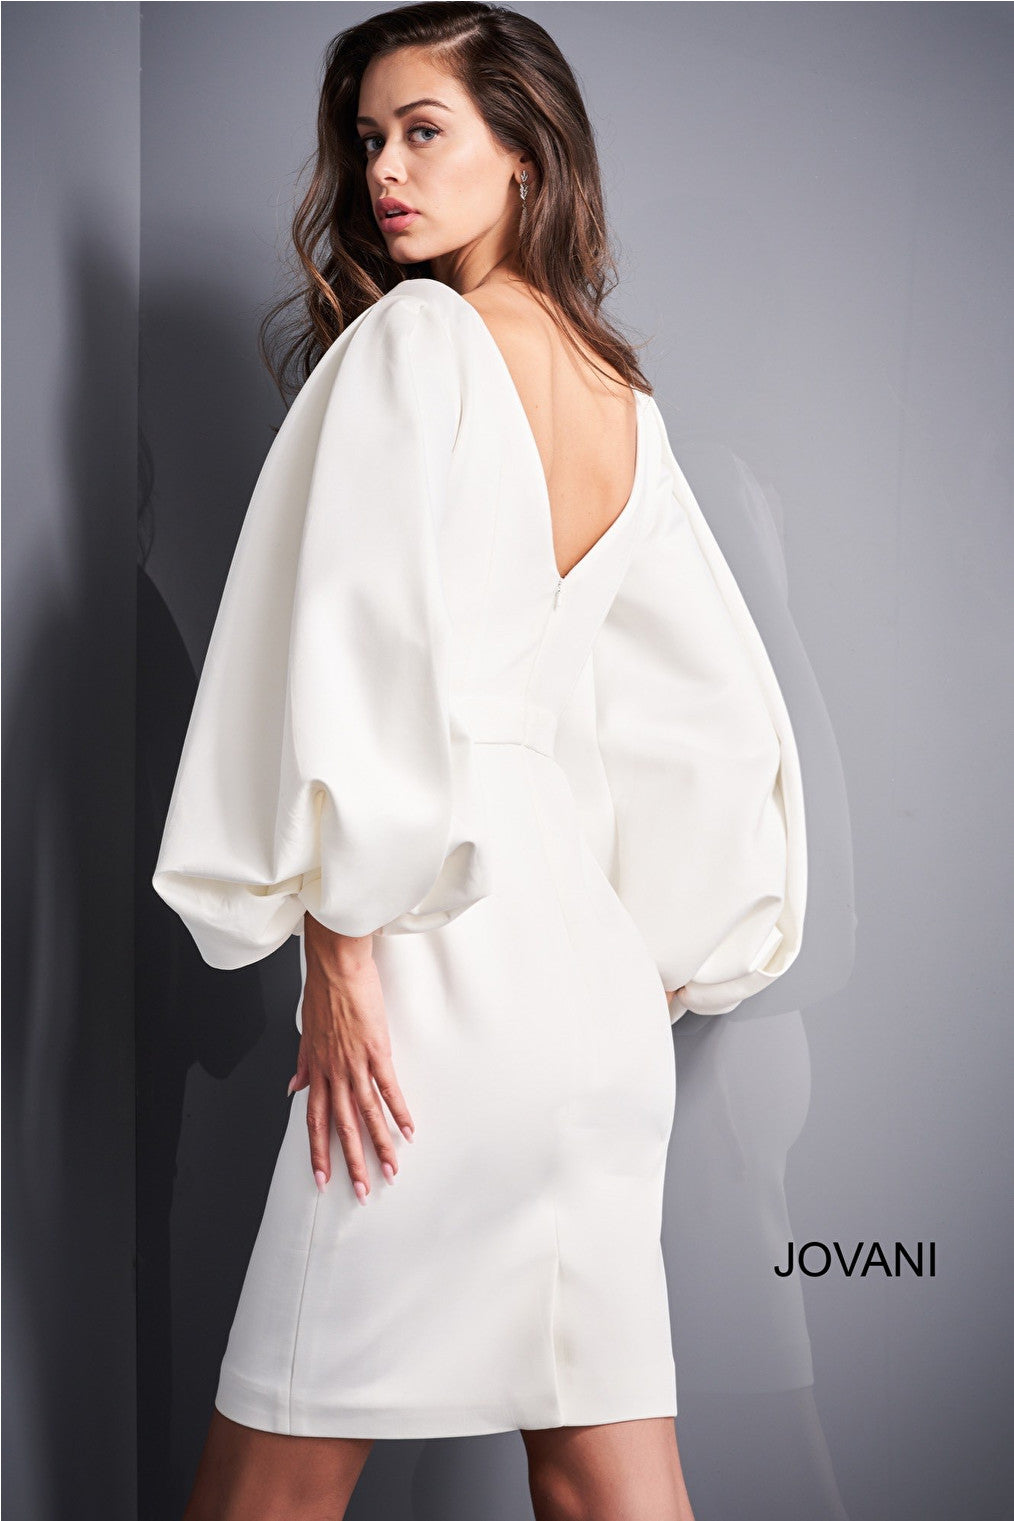 Knee length white Jovani cocktail dress 04370